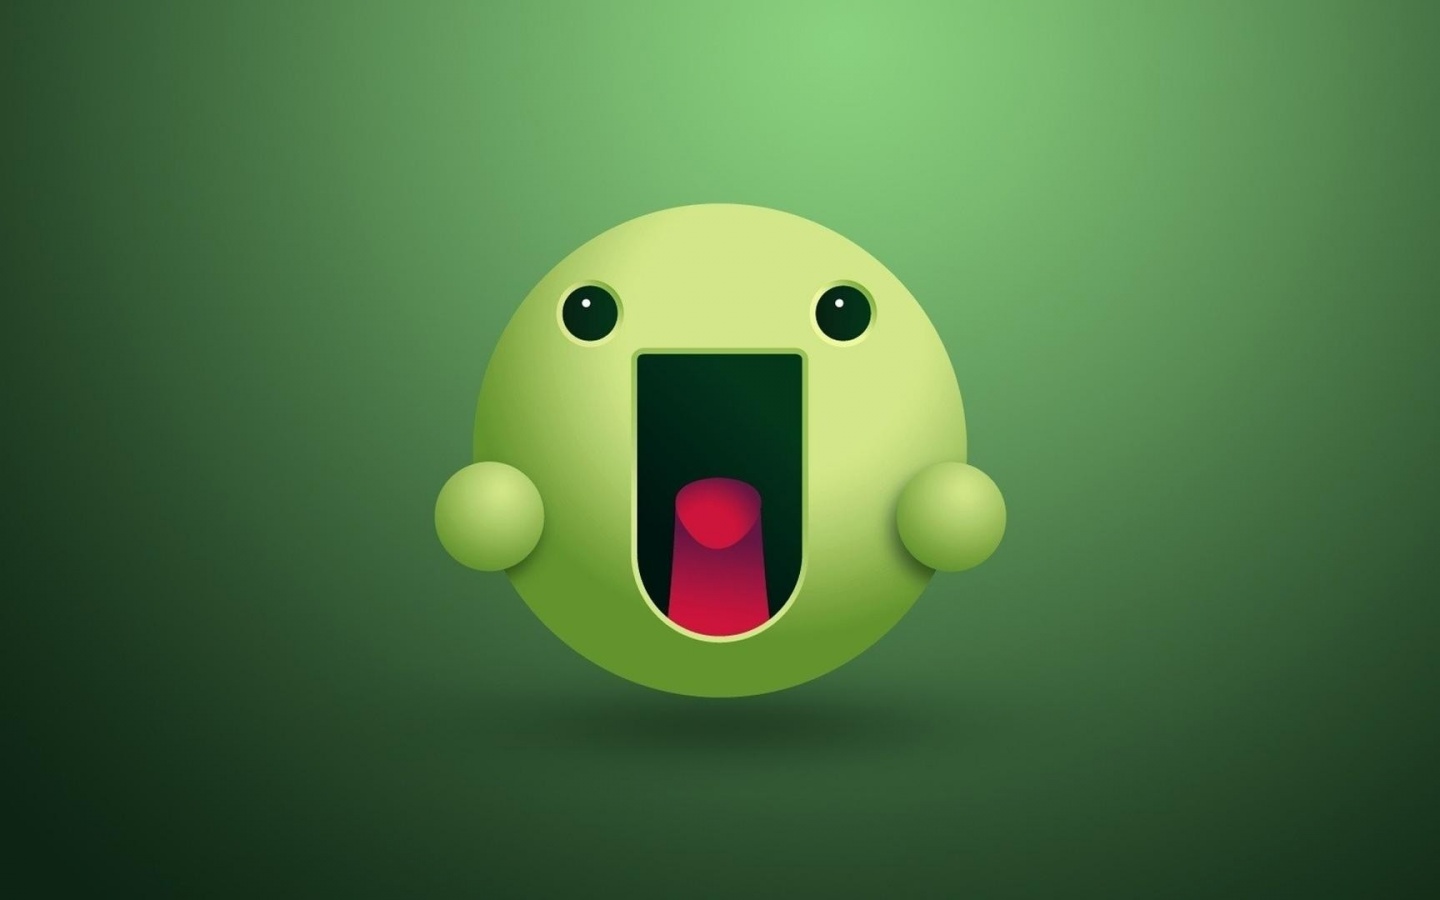 Green Smiley Face Desktop Pc And Mac Wallpaper